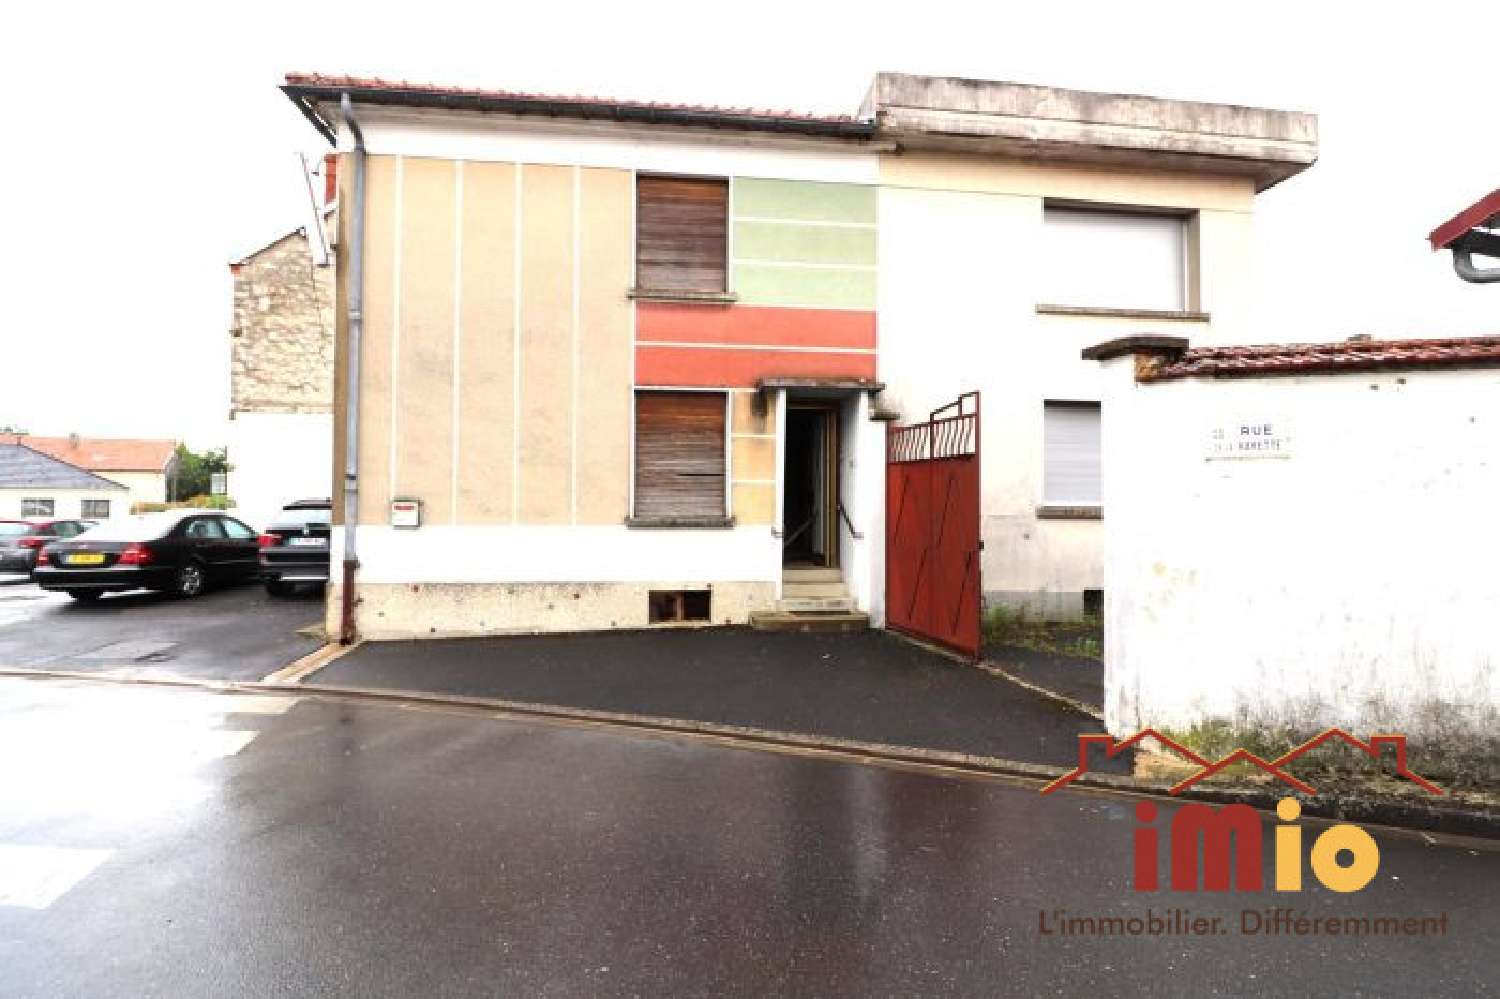  kaufen Wohnung/ Apartment Isles-sur-Suippe Marne 1